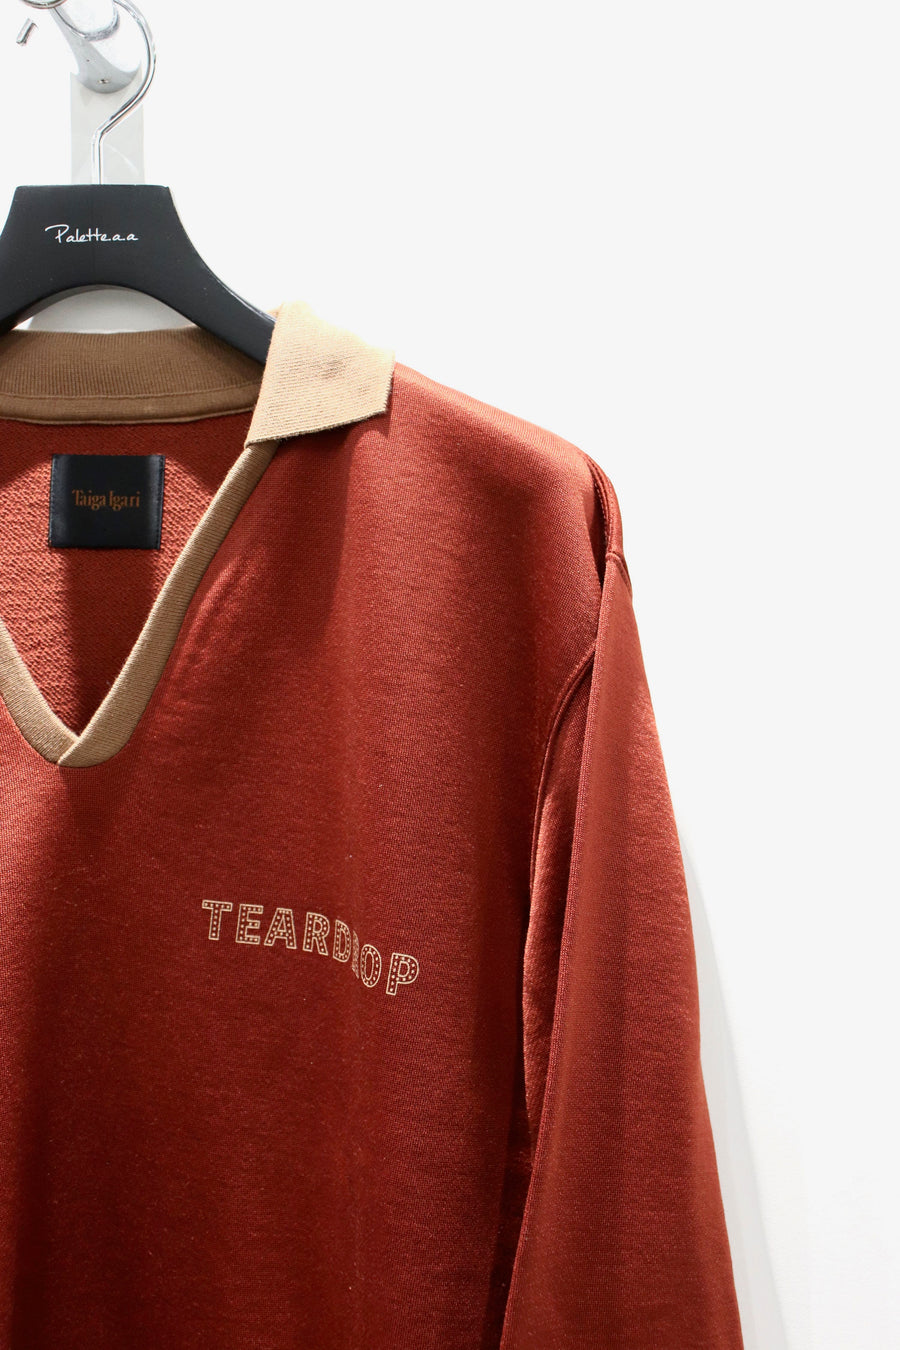 Taiga Igari  Two-Tone Racing Shirt(RED BROWN)